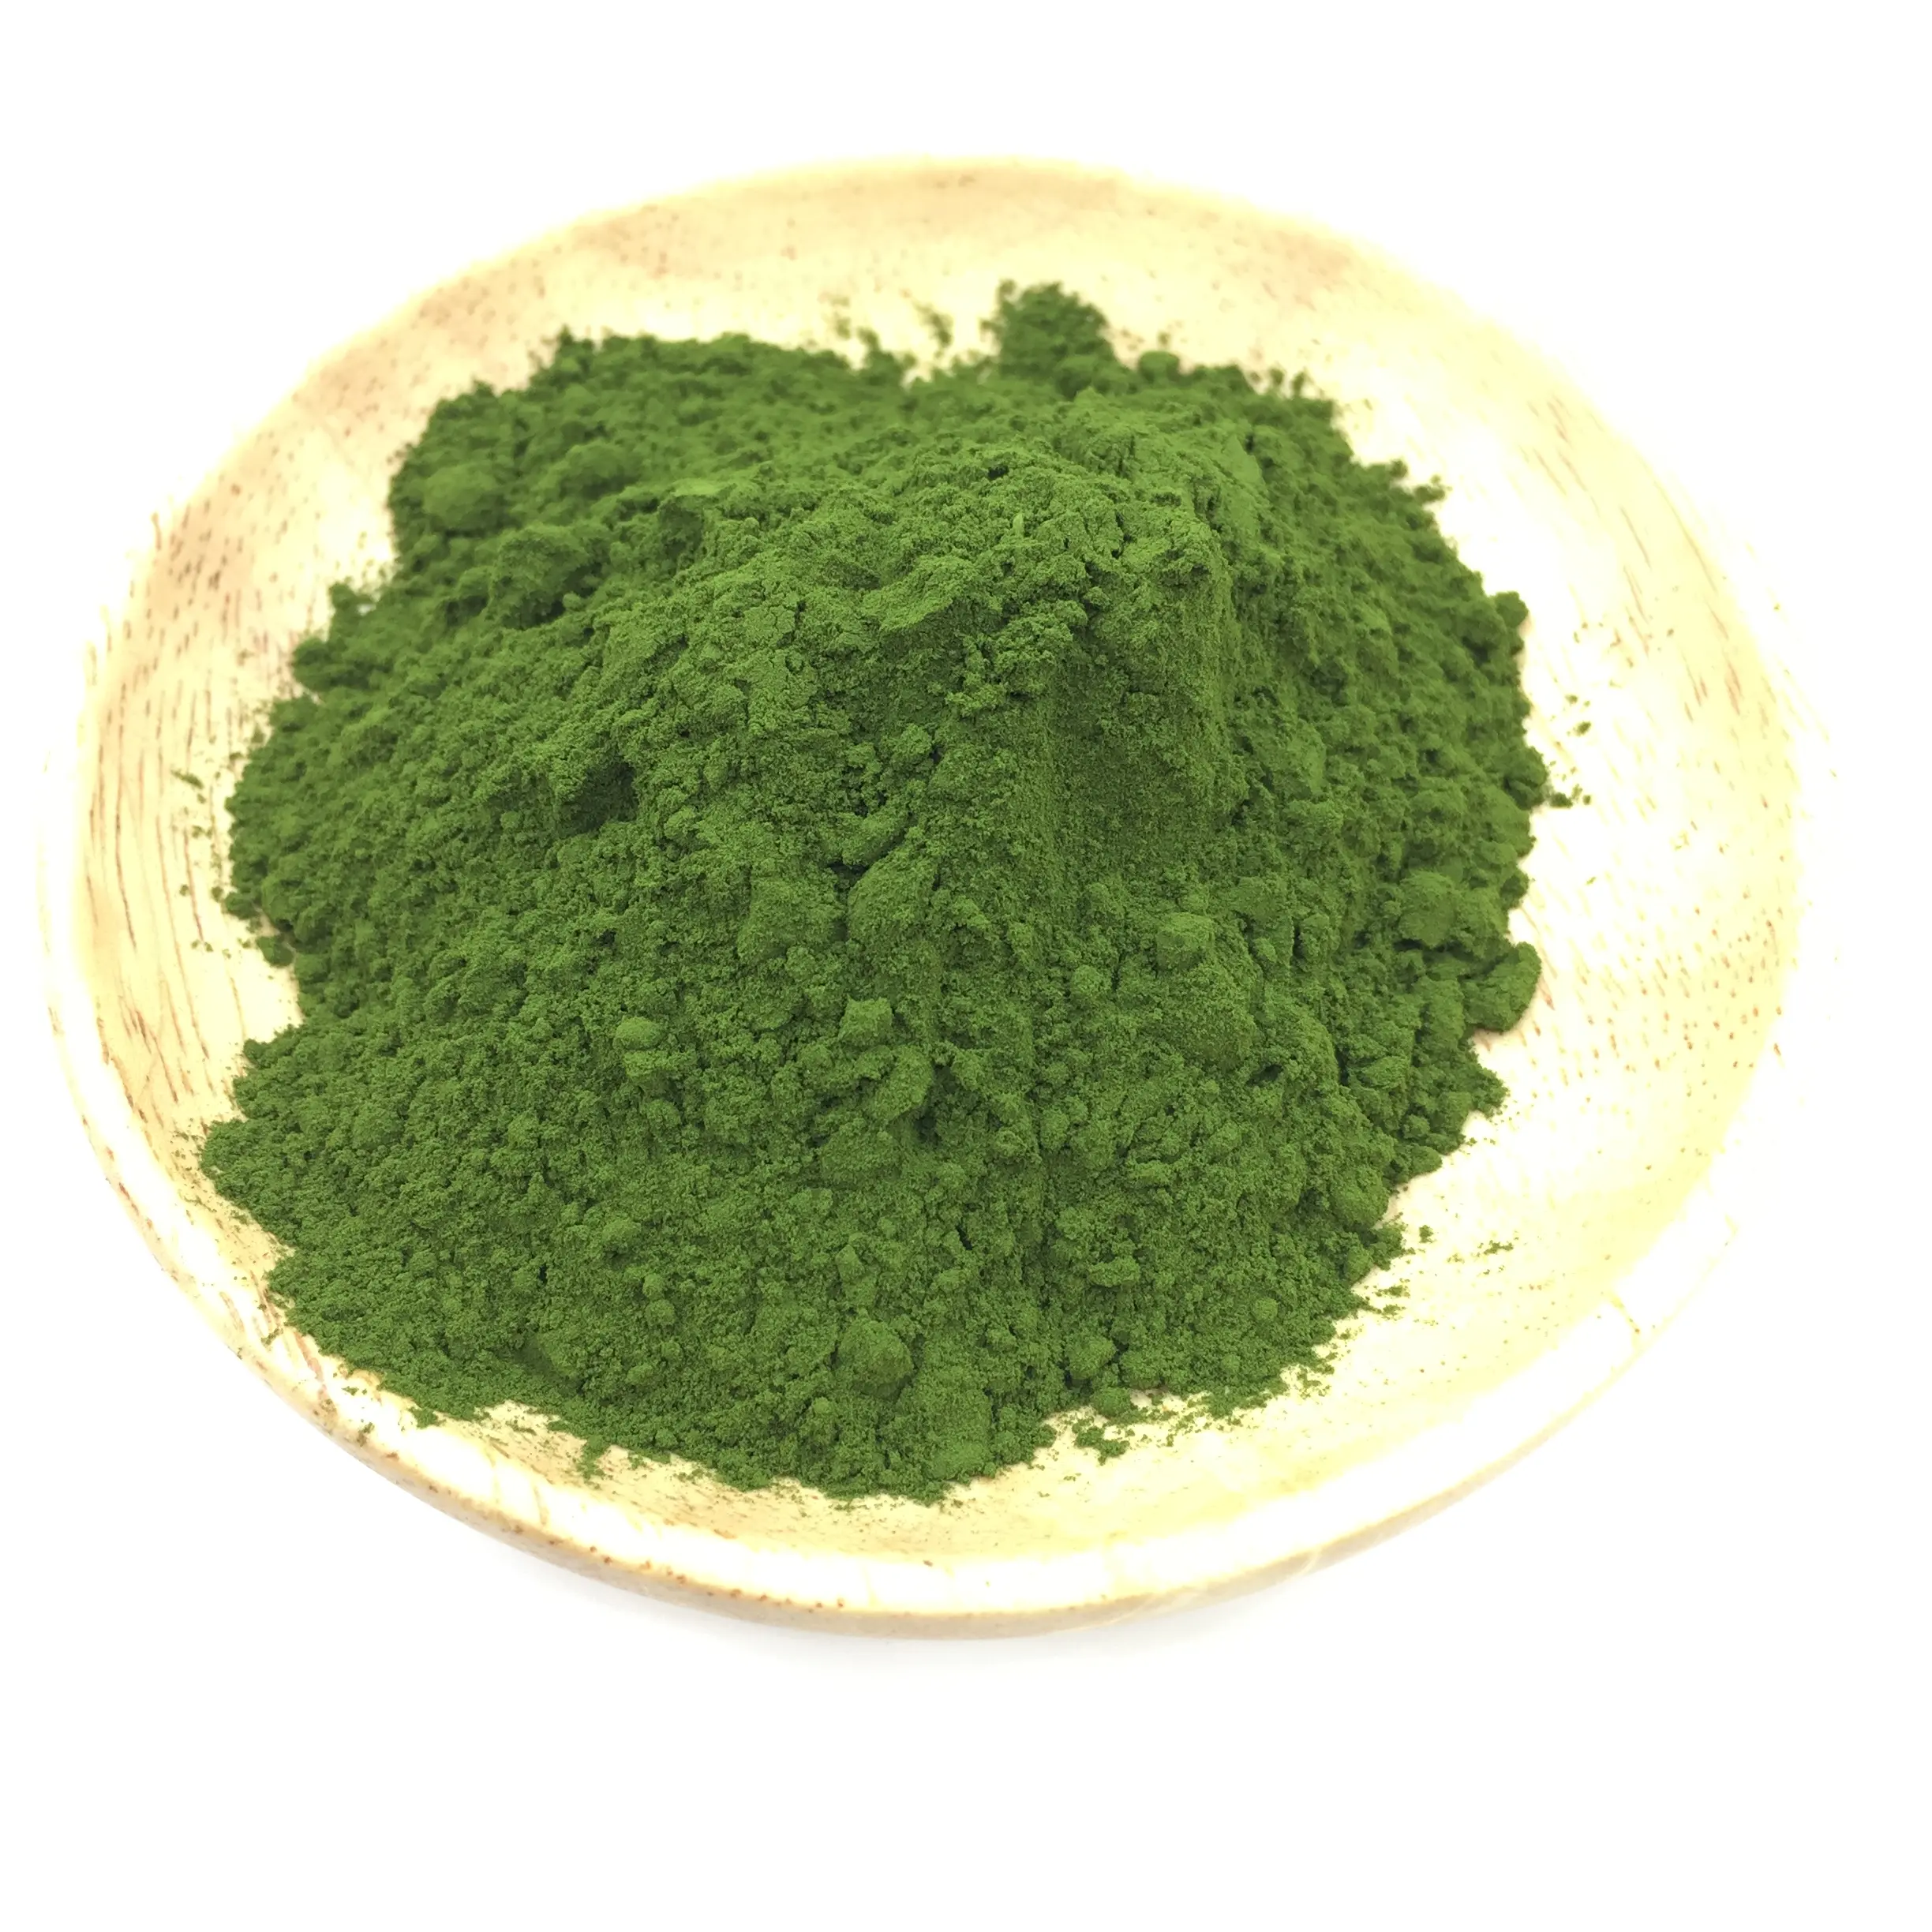 Food grade Blue-green Algae Afa/Aphanizomenon Flos-aquae Powder